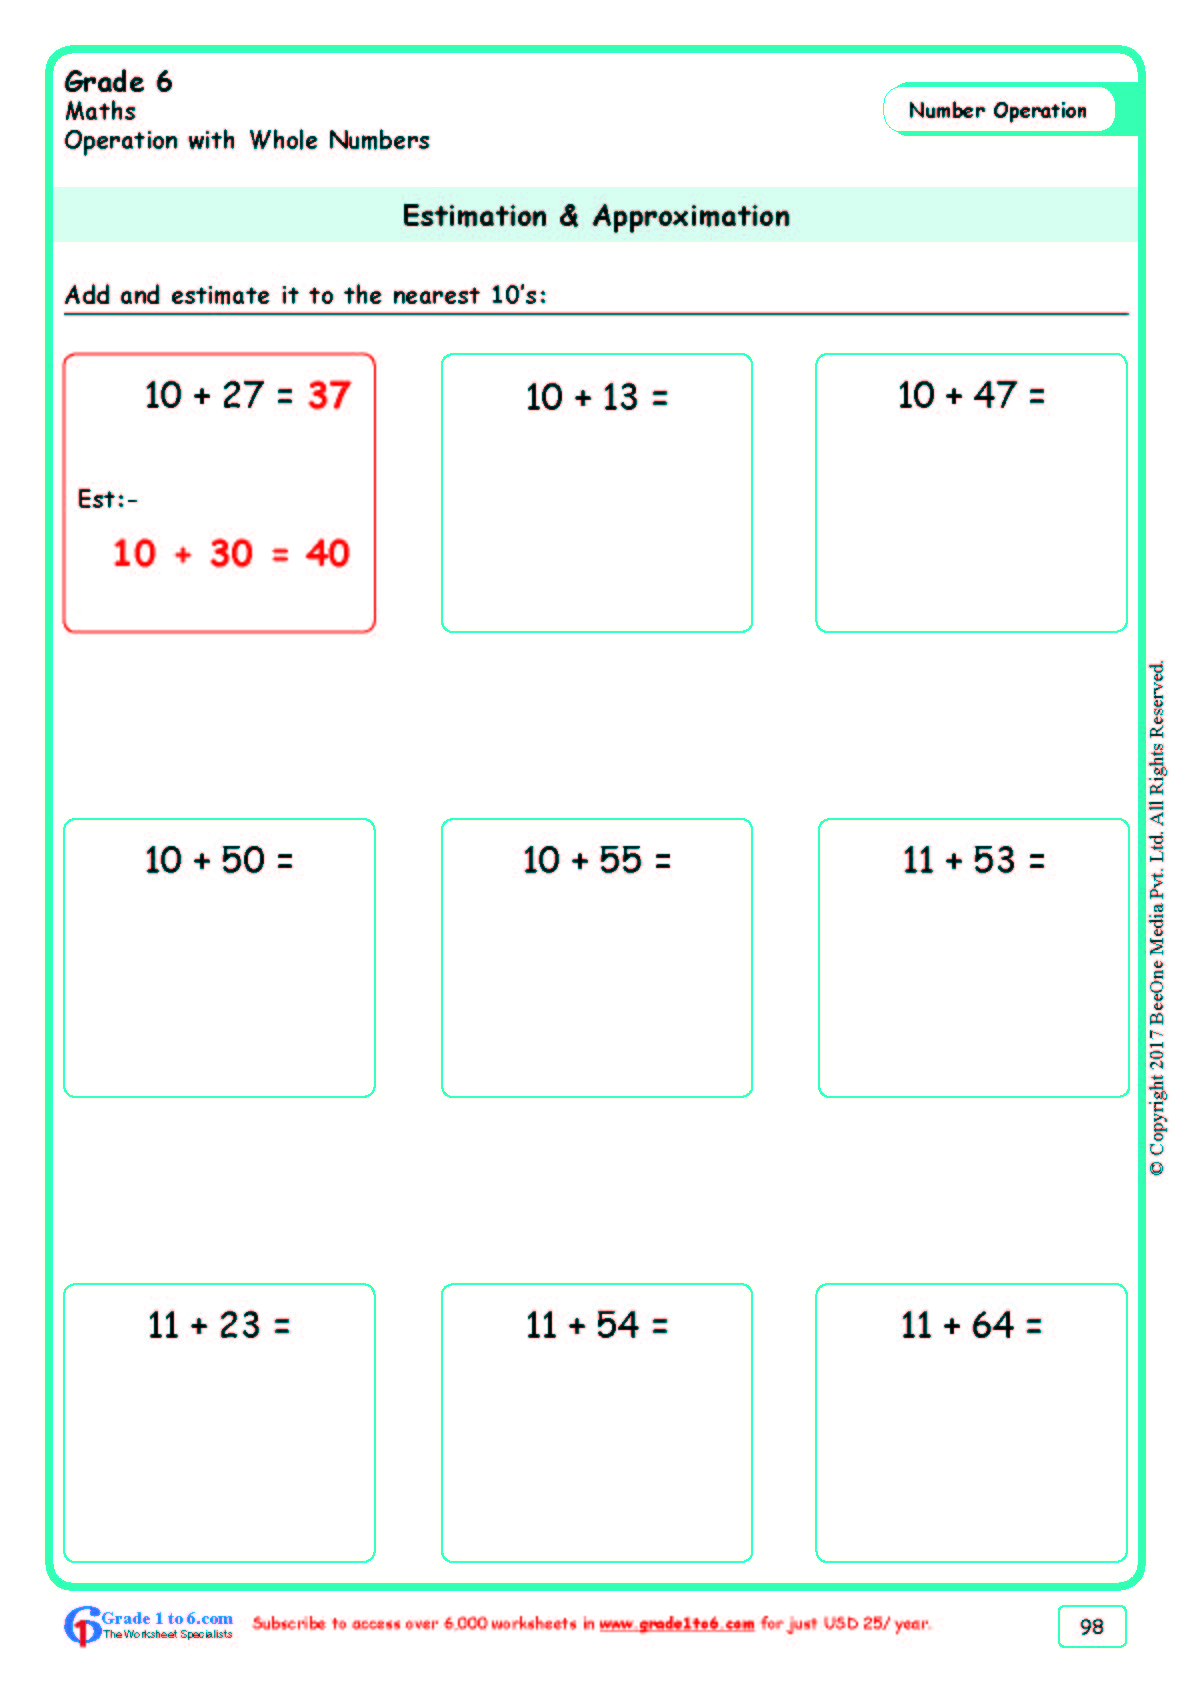 Grade 6Class Six Estimation